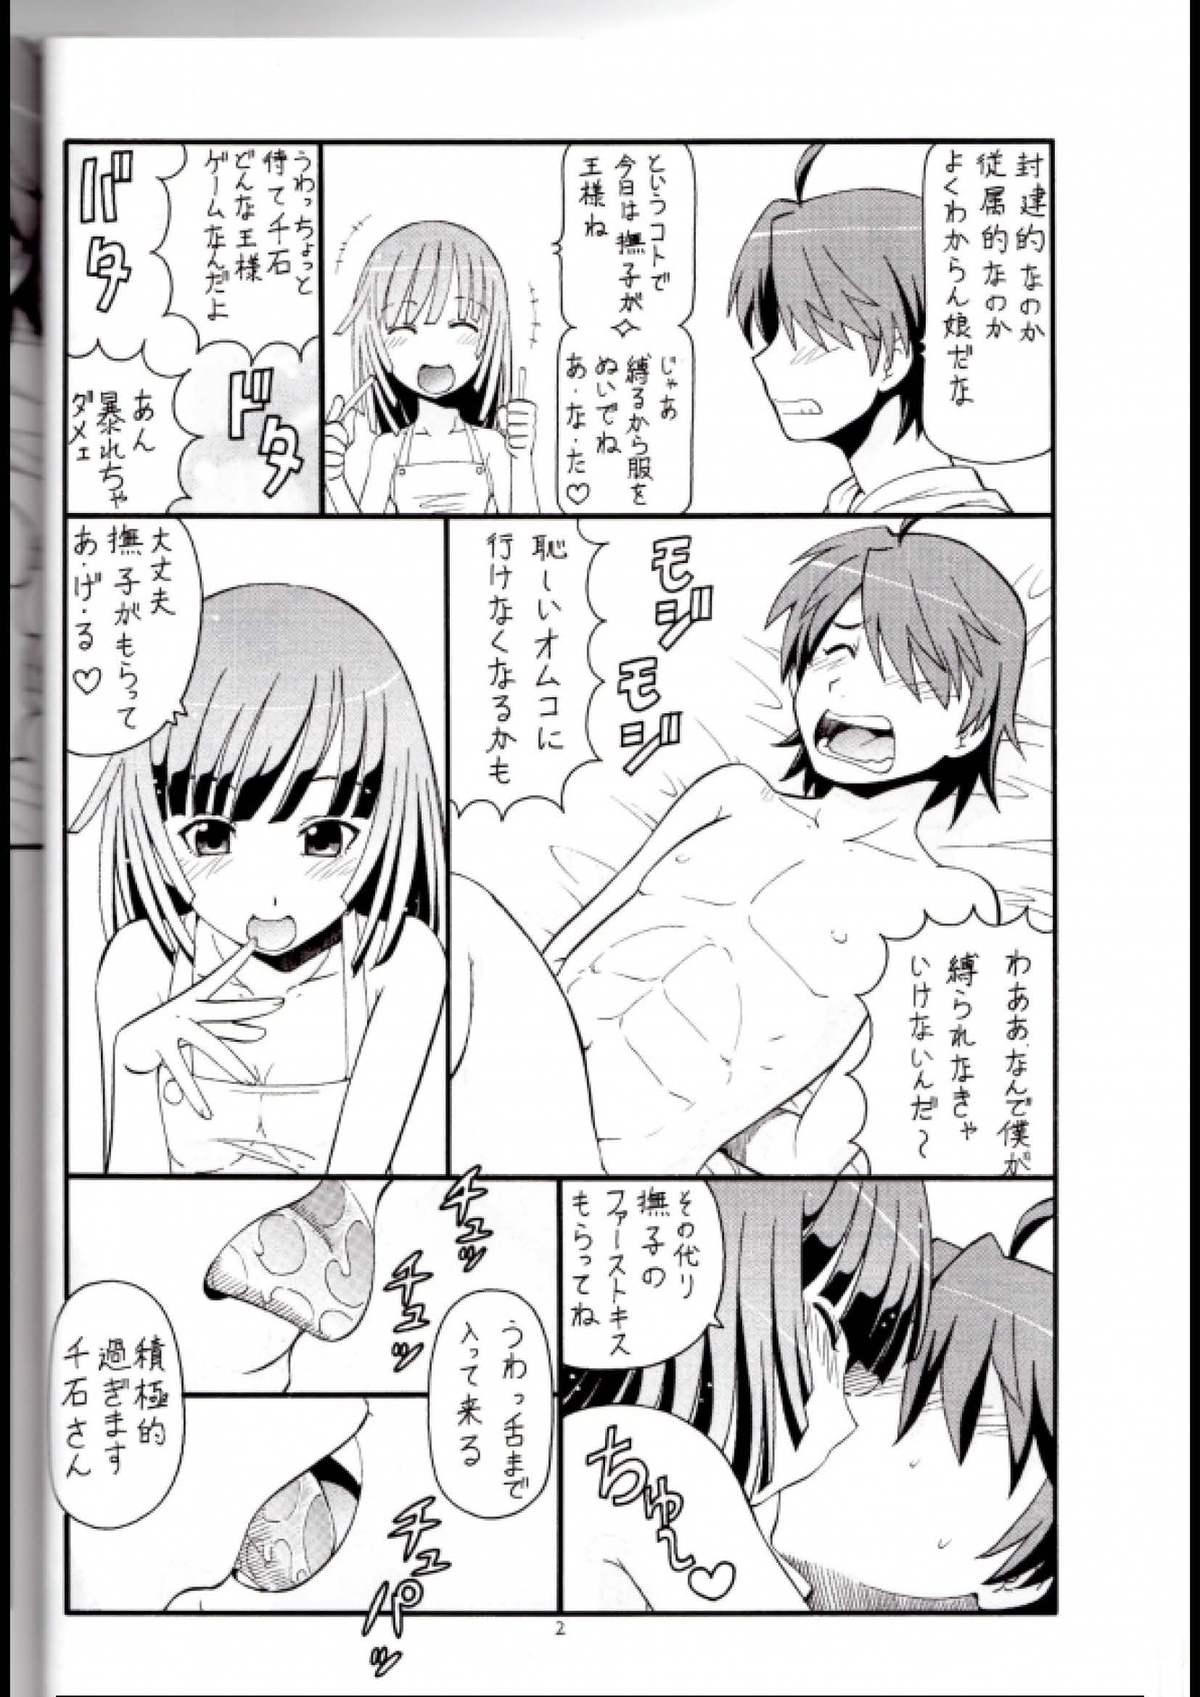 Booty Hito ni Hakanai to Kaite "Araragi" to Yomu 2&3 - Bakemonogatari Oldvsyoung - Page 3